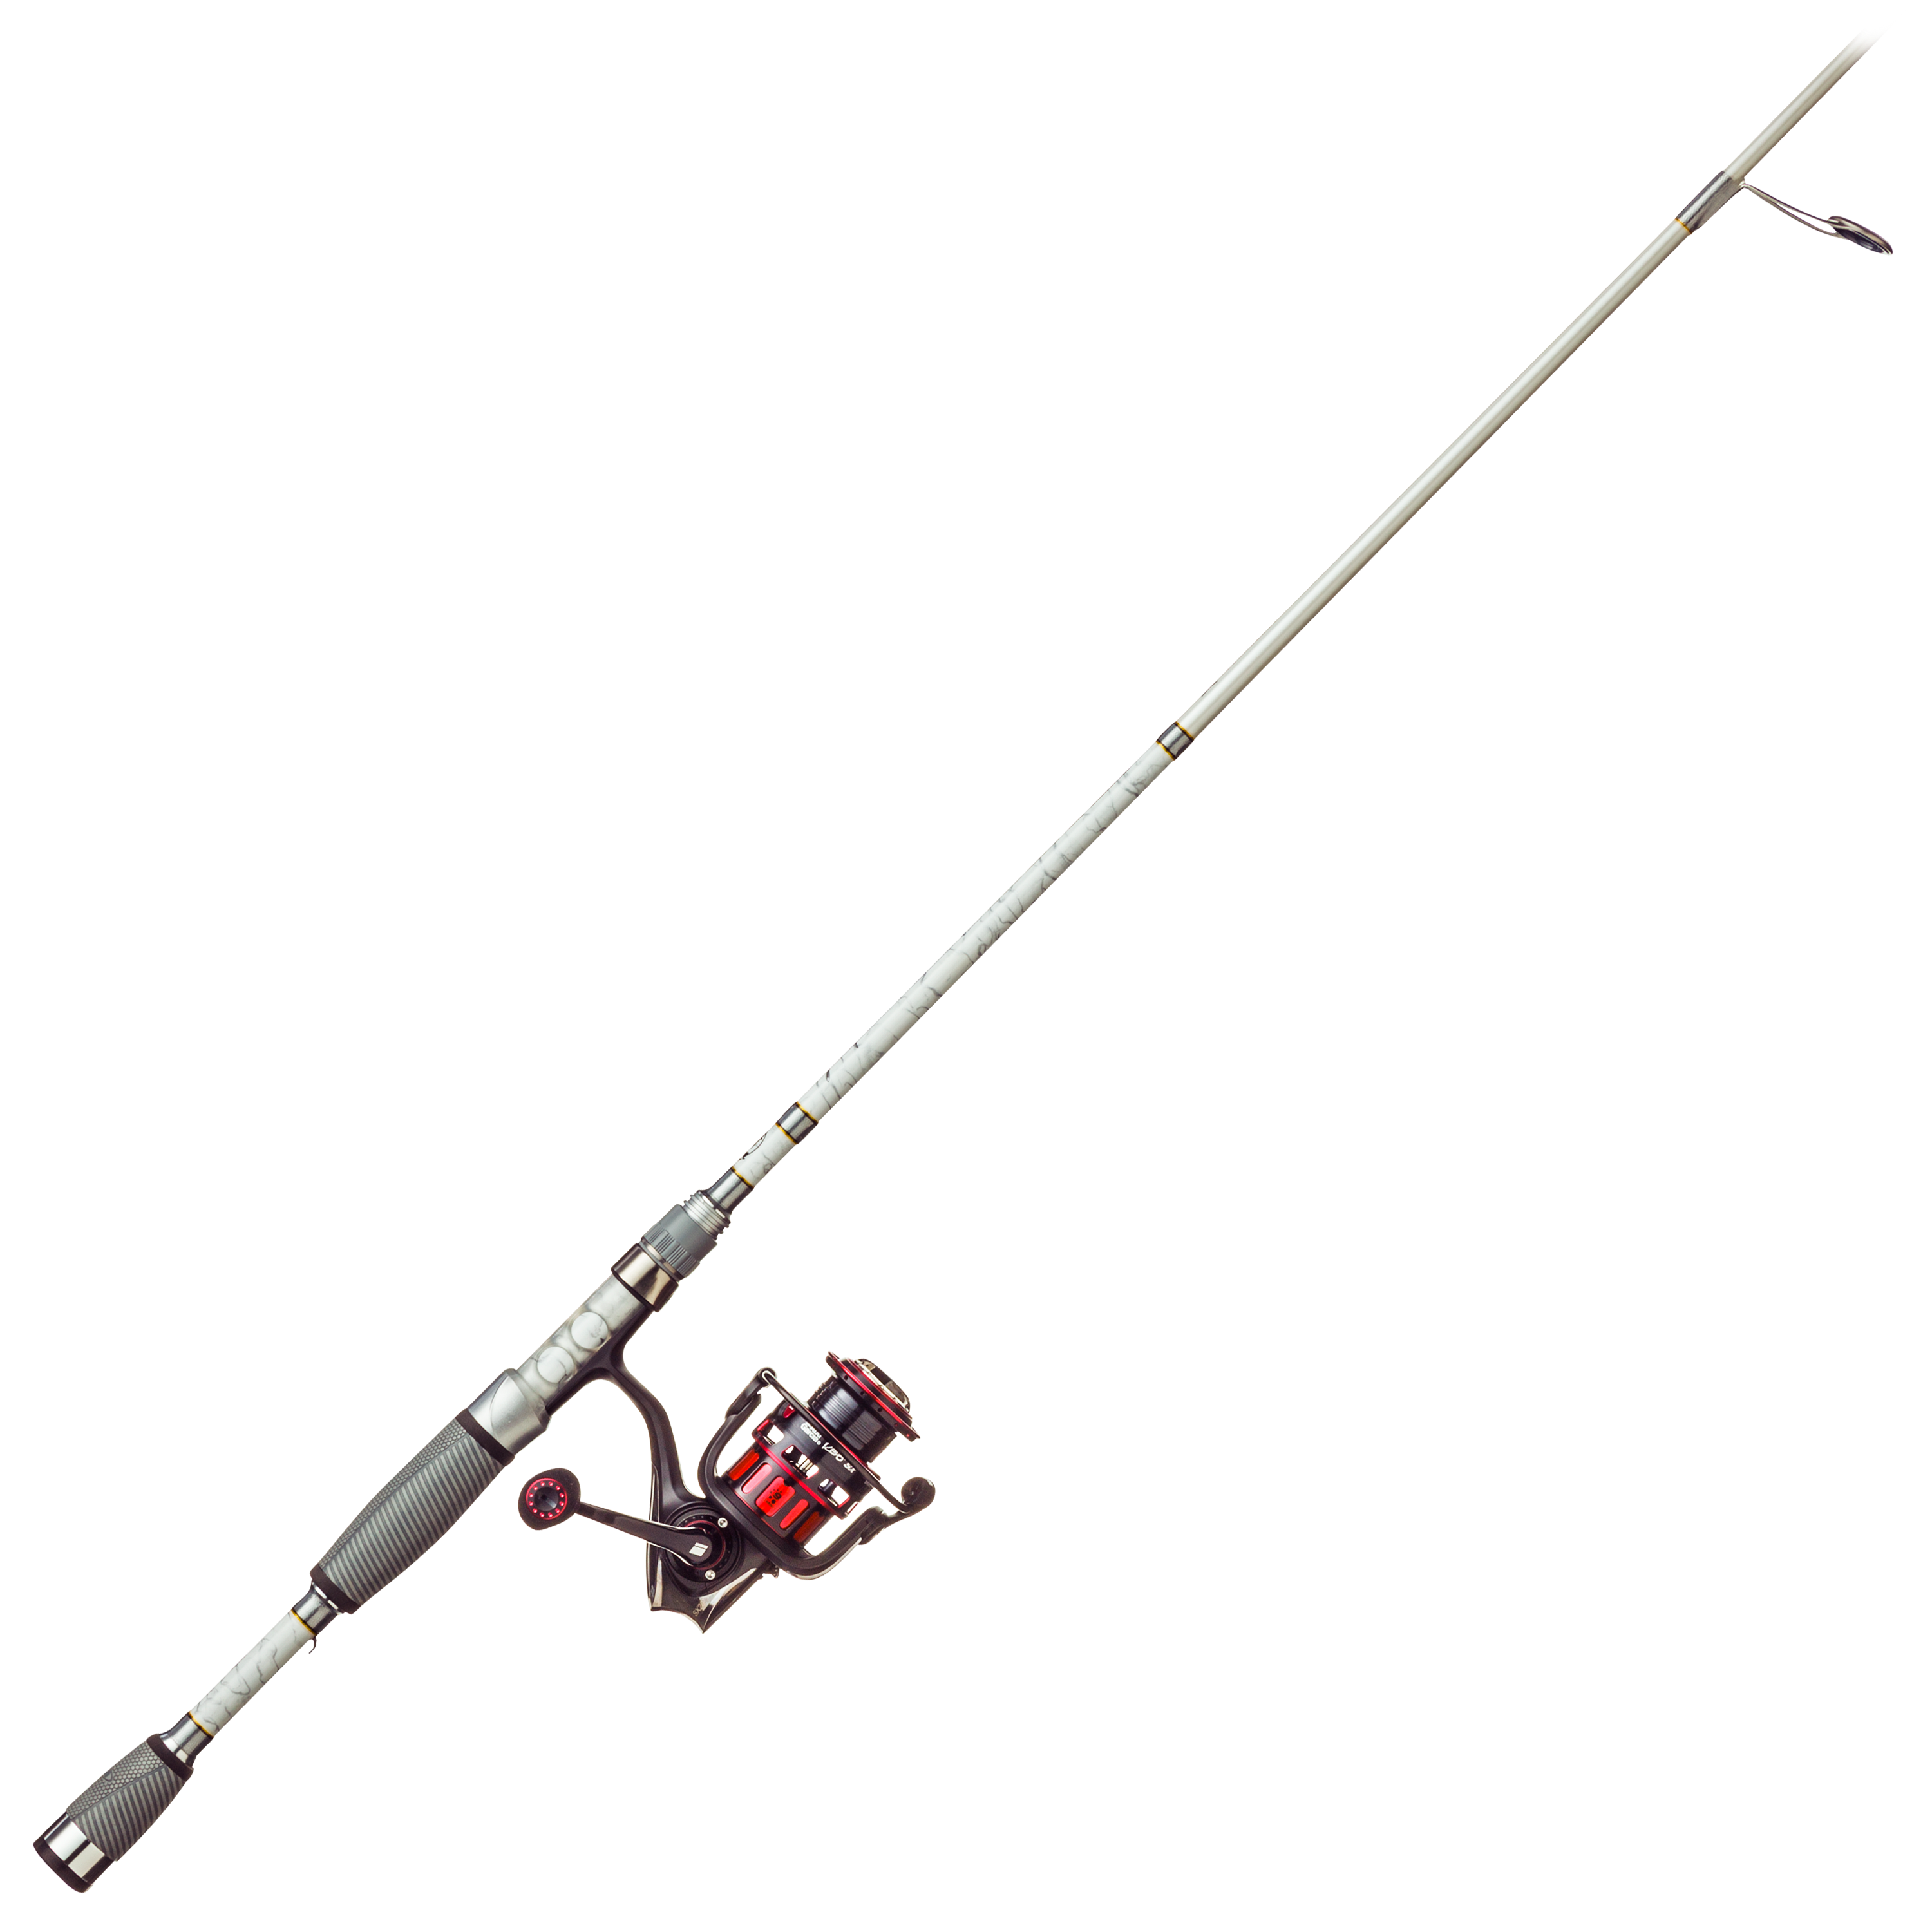 Abu Garcia Revo SX/Bass Pro Shops Johnny Morris CarbonLite Spinning Rod and Reel Combo - Model REVO2SX20/JCT70MHSF-2